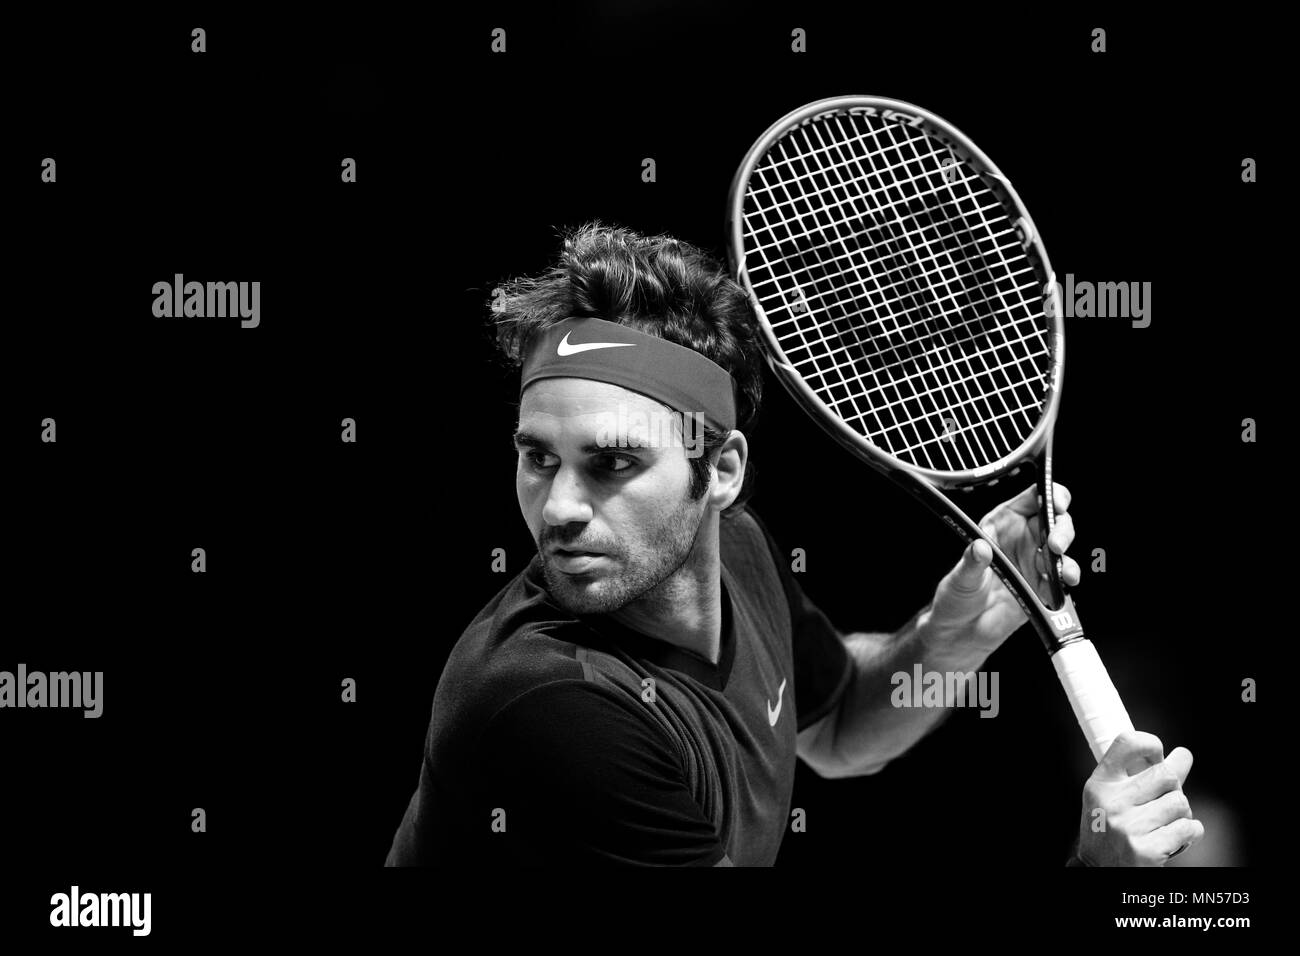 Roger Federer vs Kei Nishikori during Day 4 of the 2015 Barclays ATP World Tour Finals - O2 Arena London England. 19 November 2015 Stock Photo